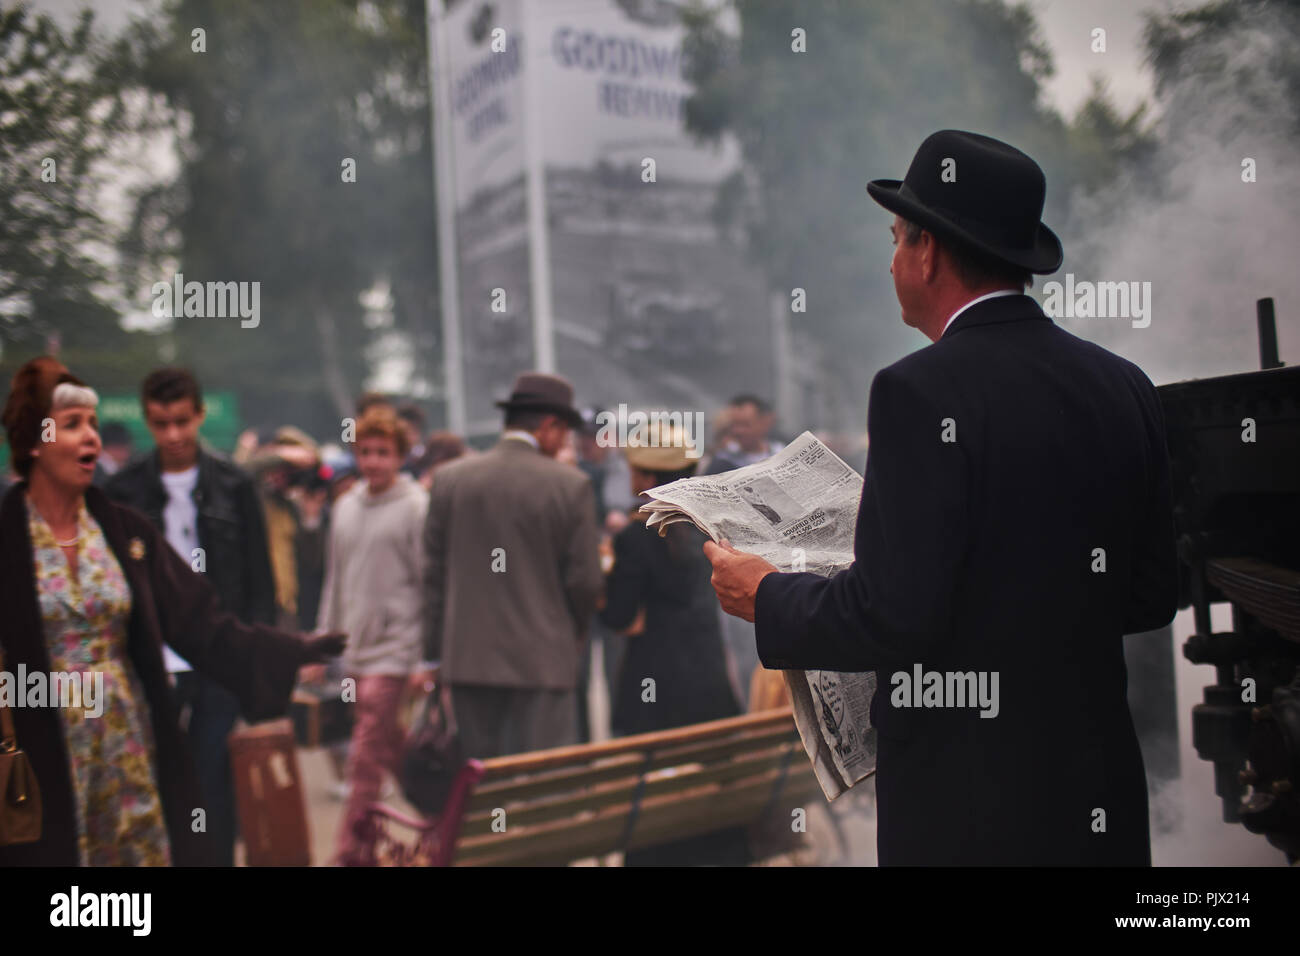 Chichester, West Sussex, UK, 9. September 2018. Menschen in Goodwood während des Goodwood Revival in Goodwood Motor Circuit. Foto: Gergo Toth/Alamy leben Nachrichten Stockfoto